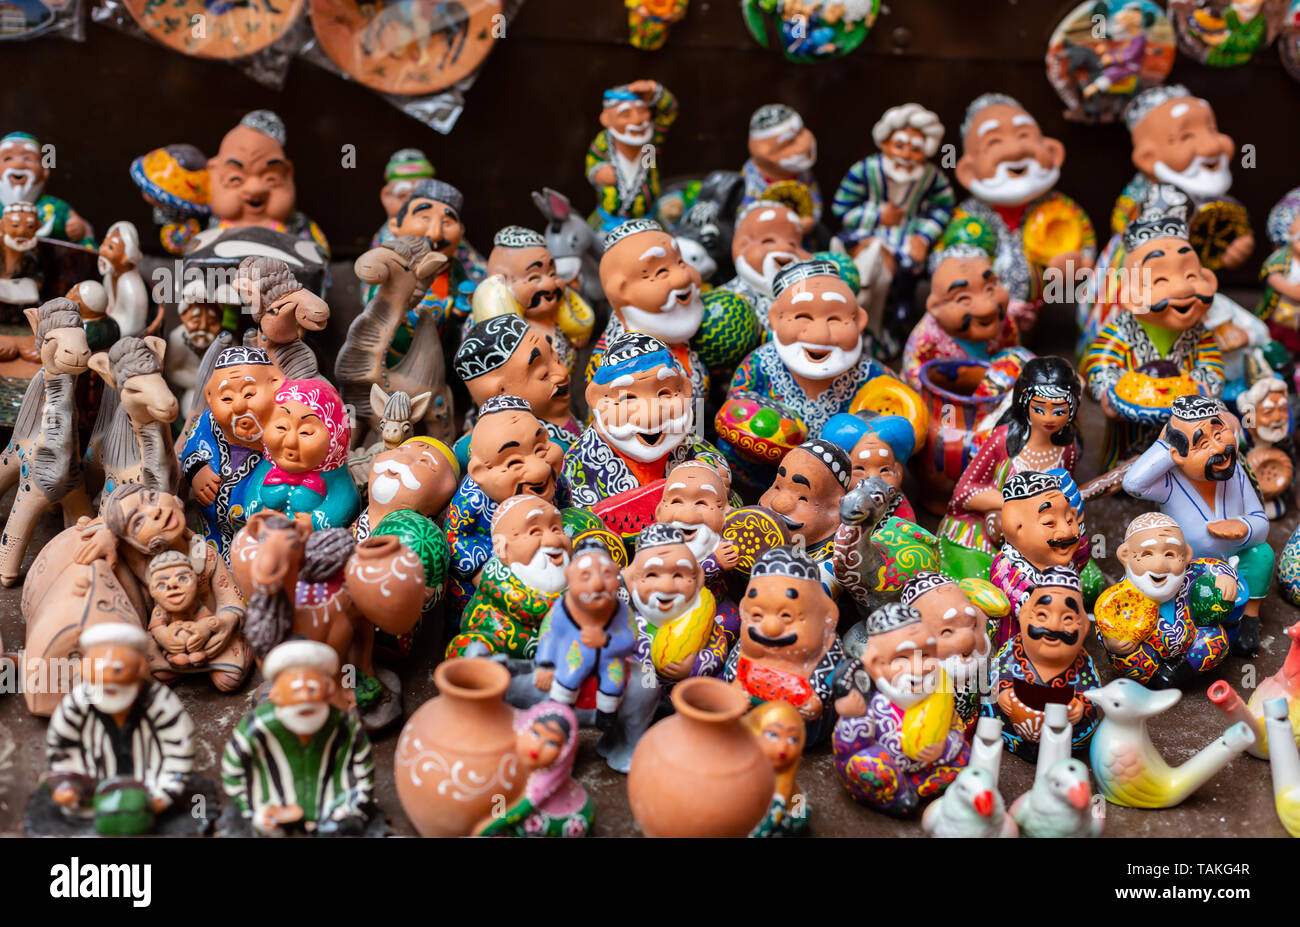 the showcase with Uzbek Souvenirs, ceramic figurines of people. Stock Photo